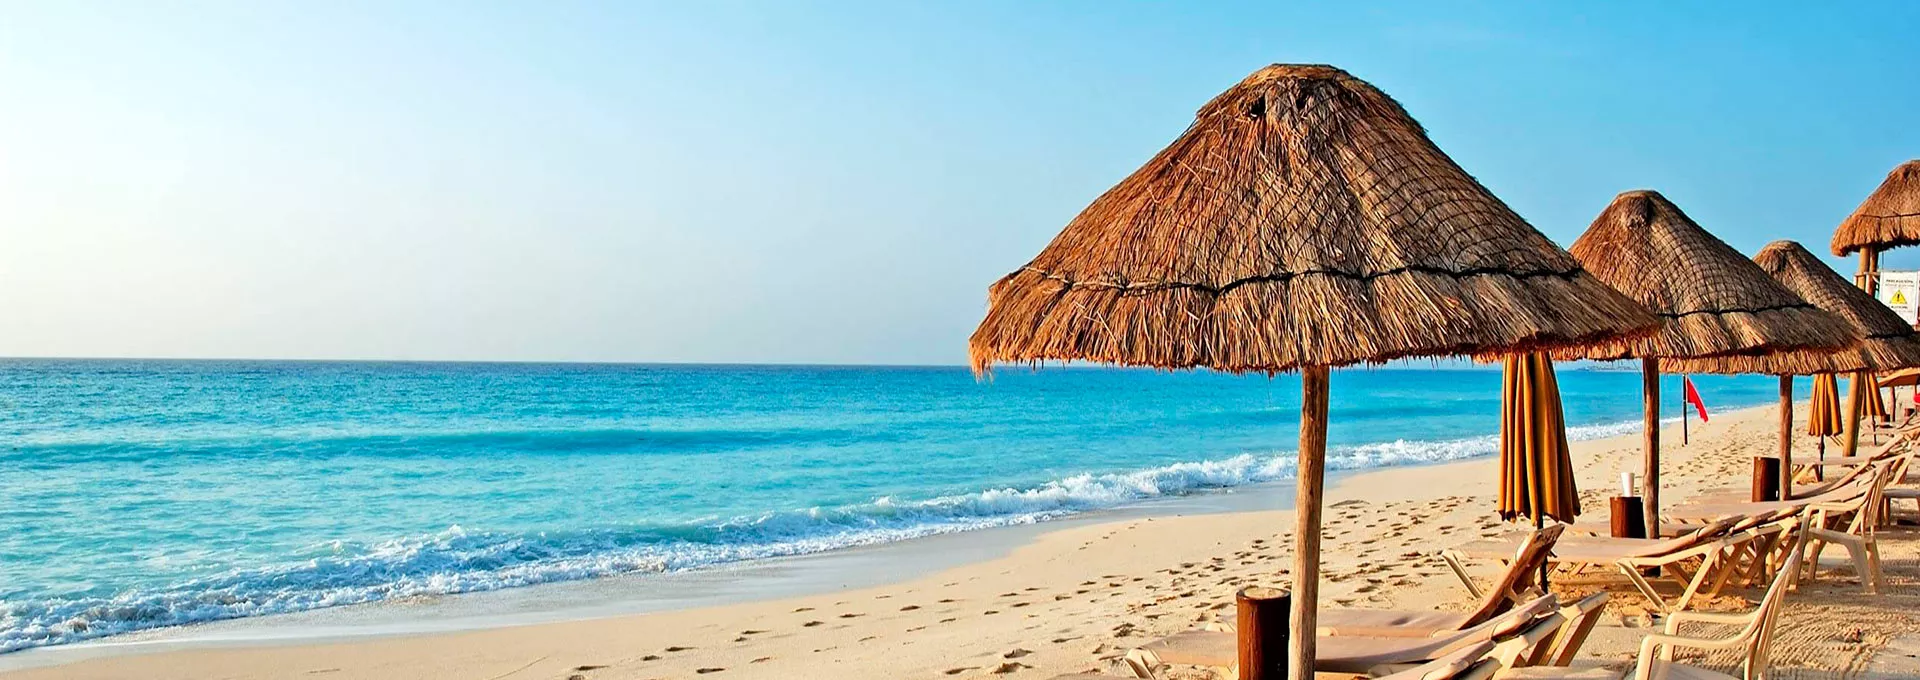 Mancora Beach in Peru, South America | Surfing,Beaches - Rated 3.6